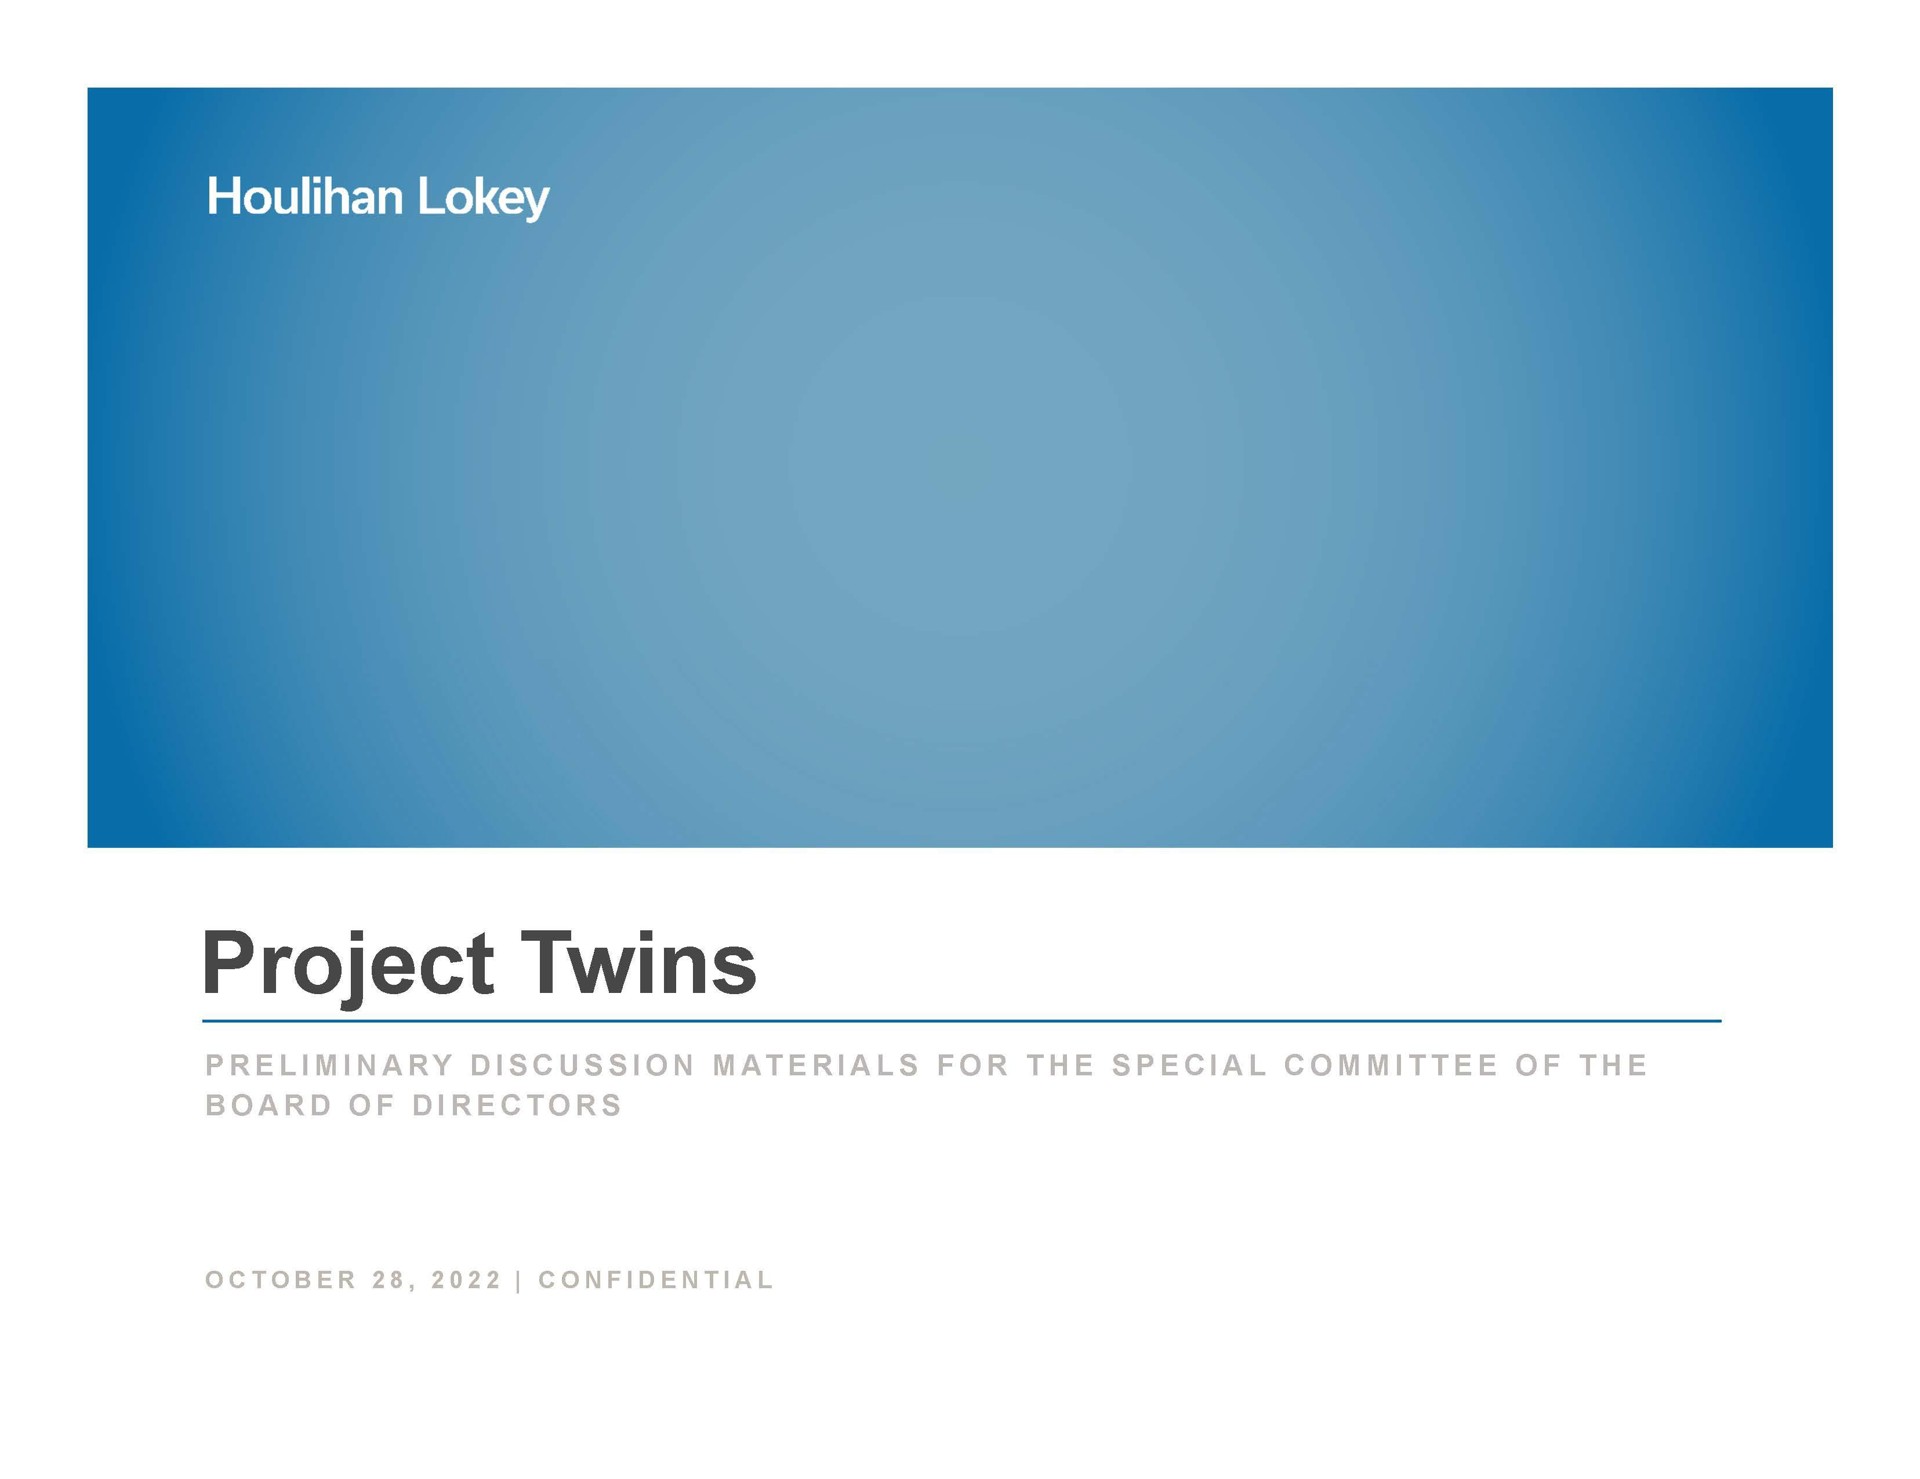 project twins | Houlihan Lokey